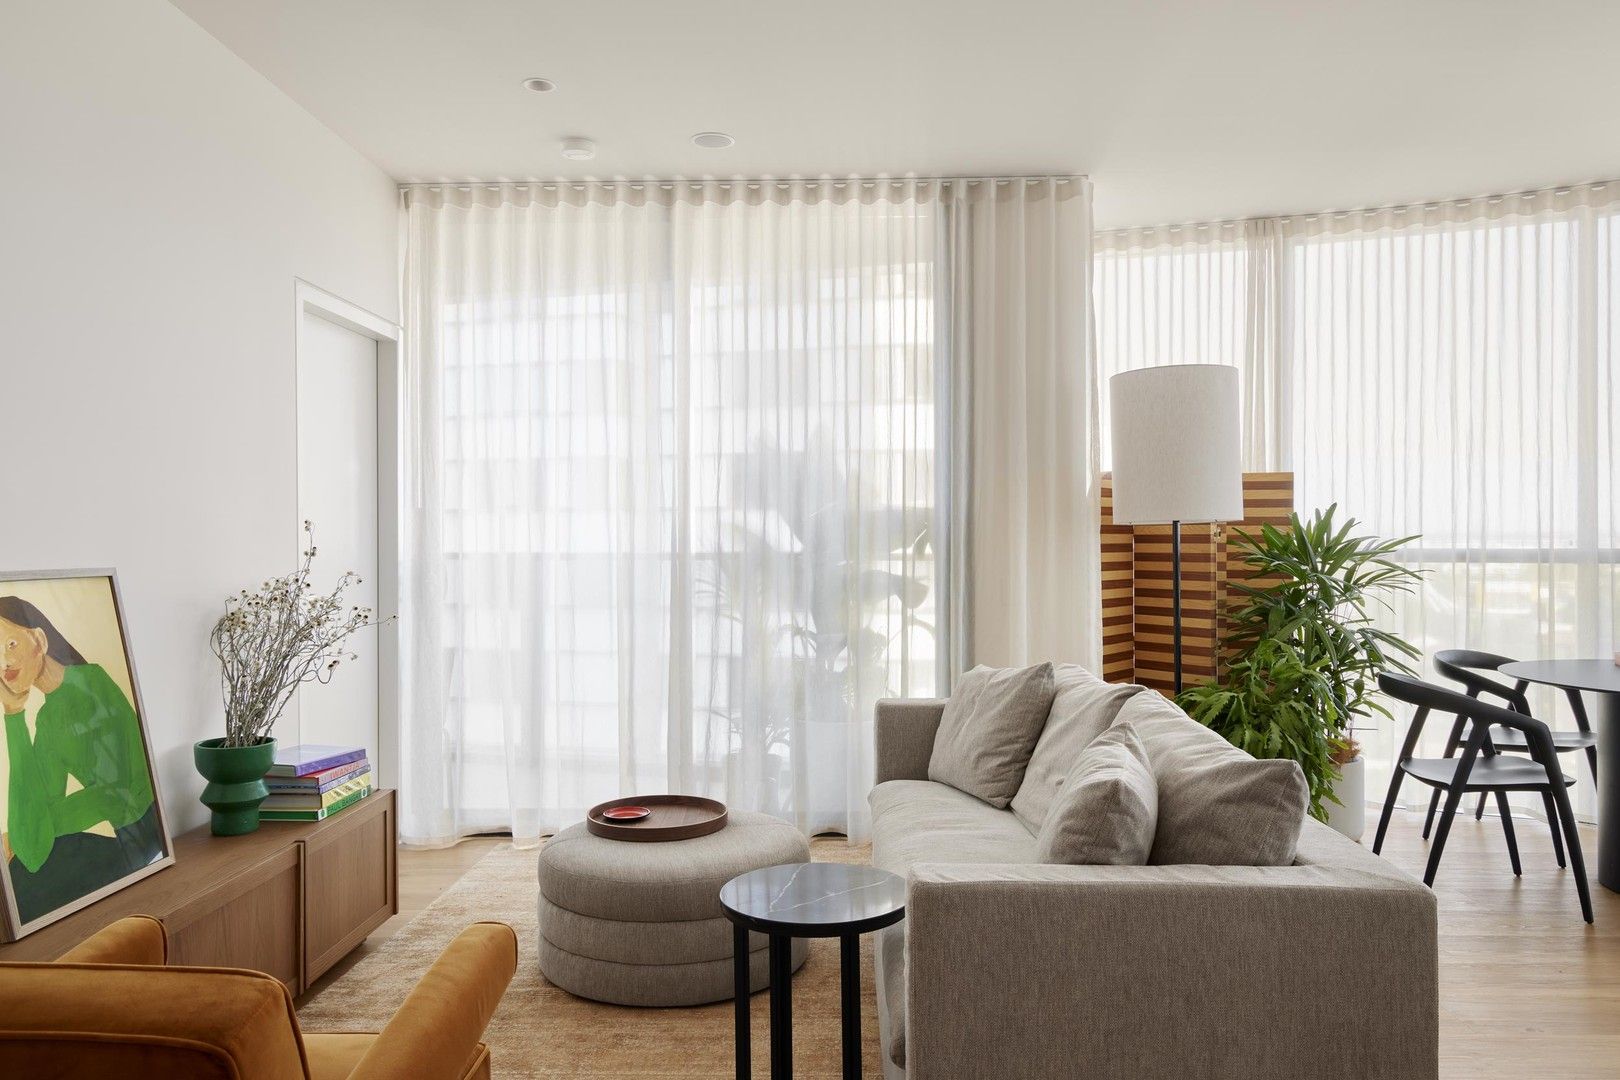 2 bedrooms Apartment / Unit / Flat in Parkes Street HARRIS PARK NSW, 2150